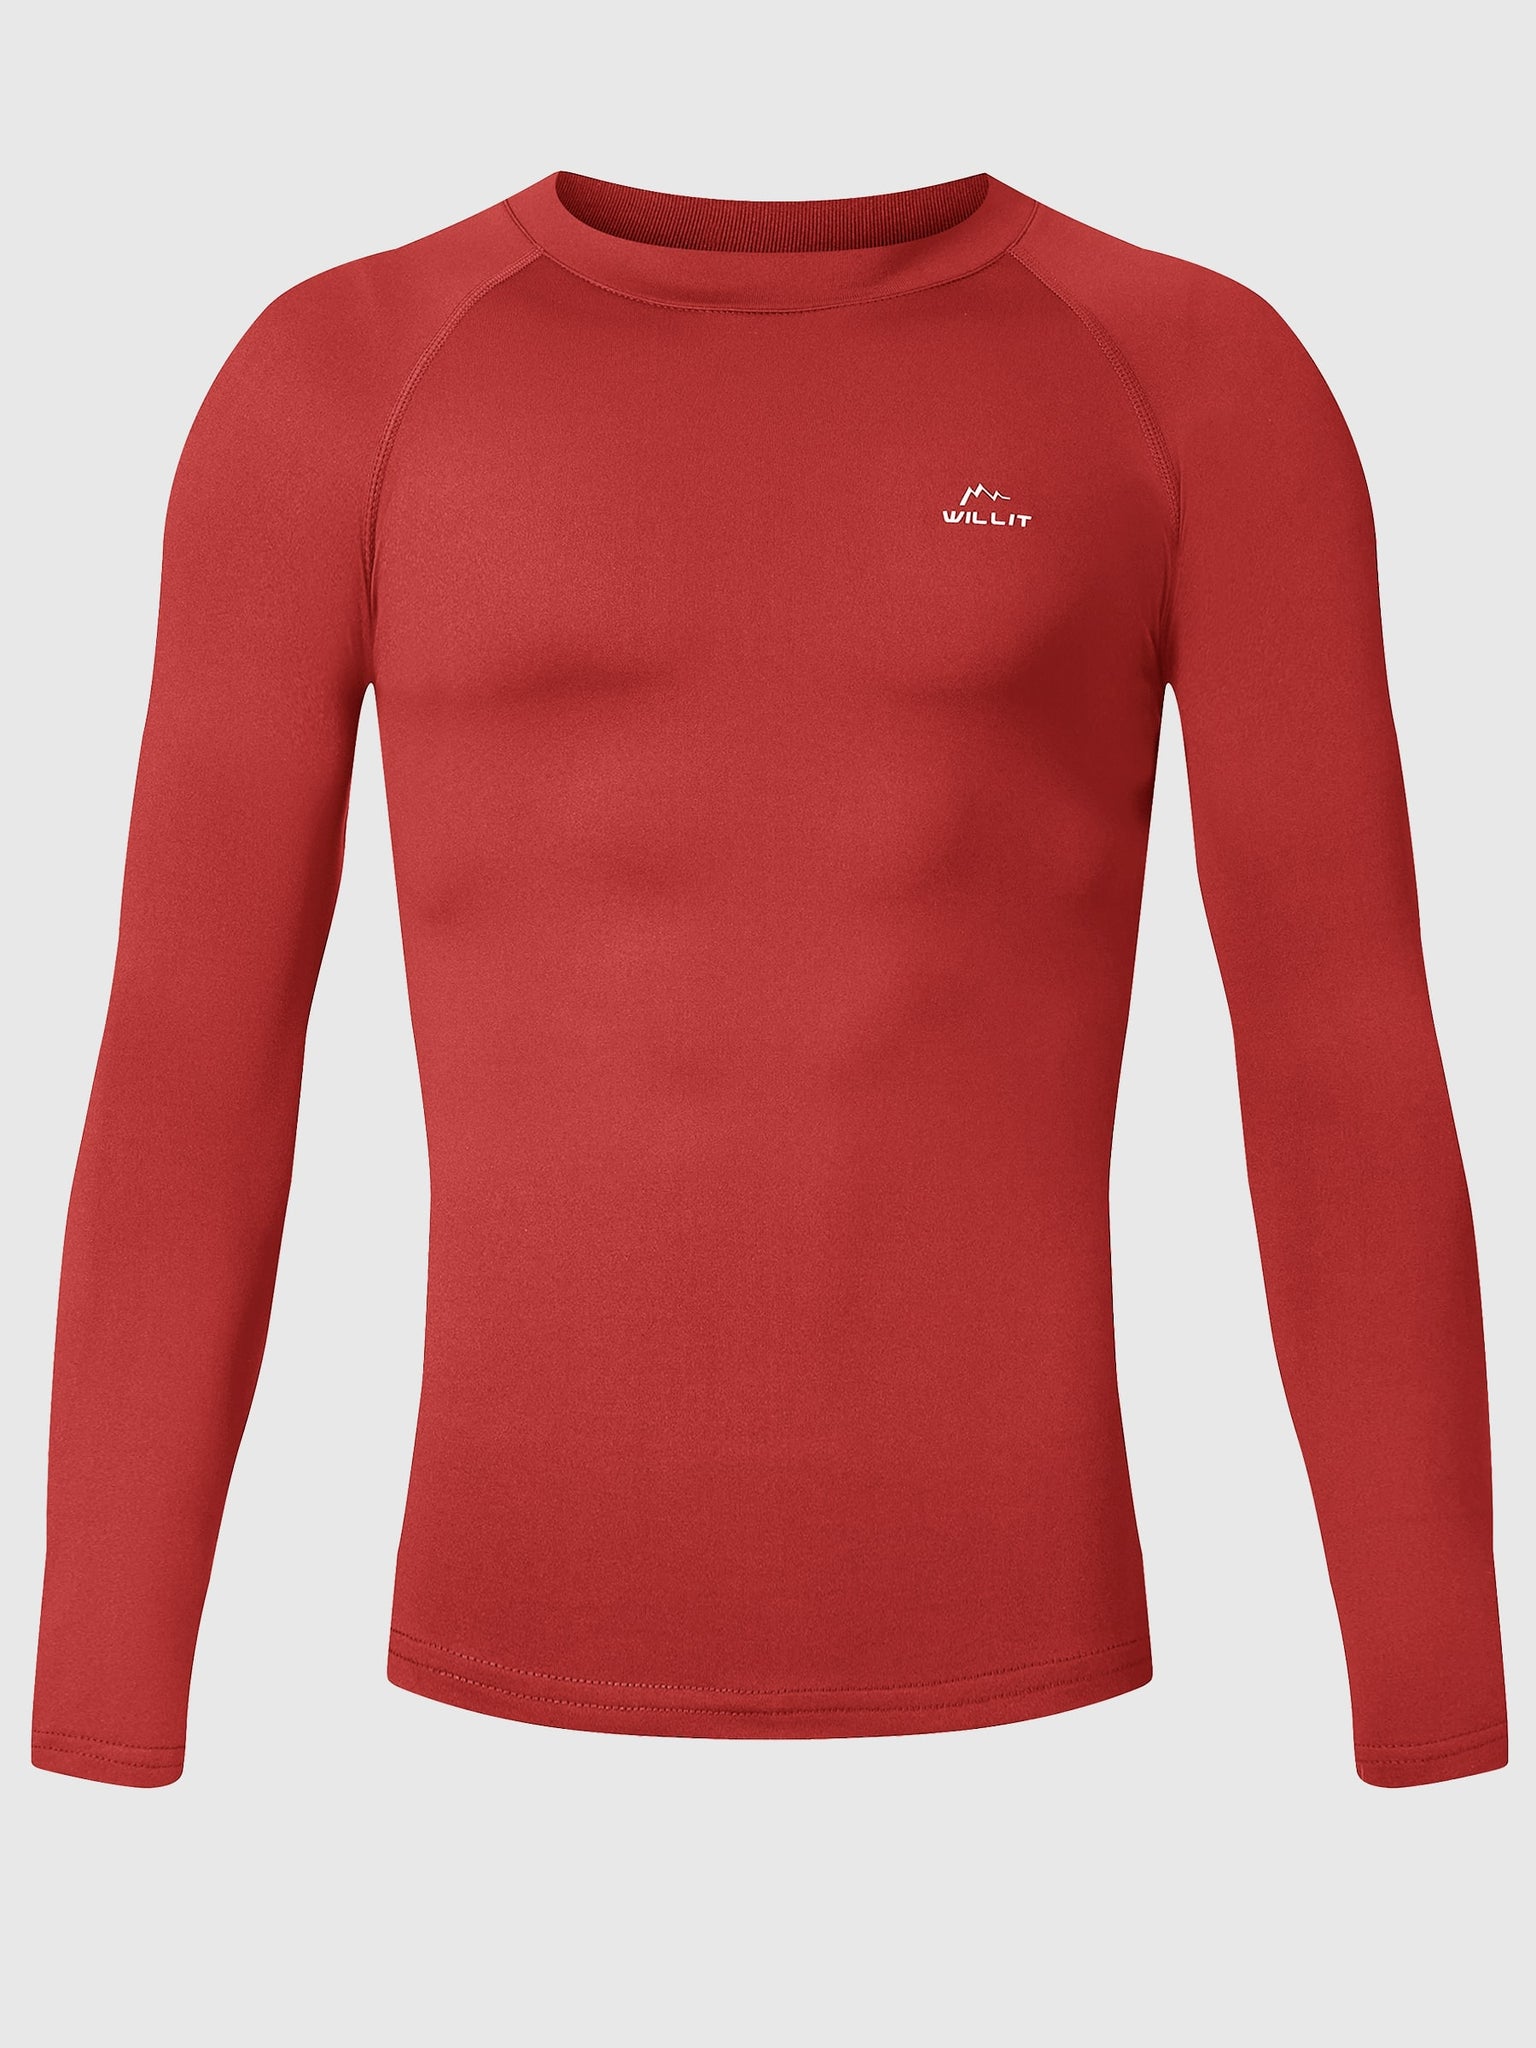 Boys Thermal Fleece Long-Sleeve Shirt_Red1